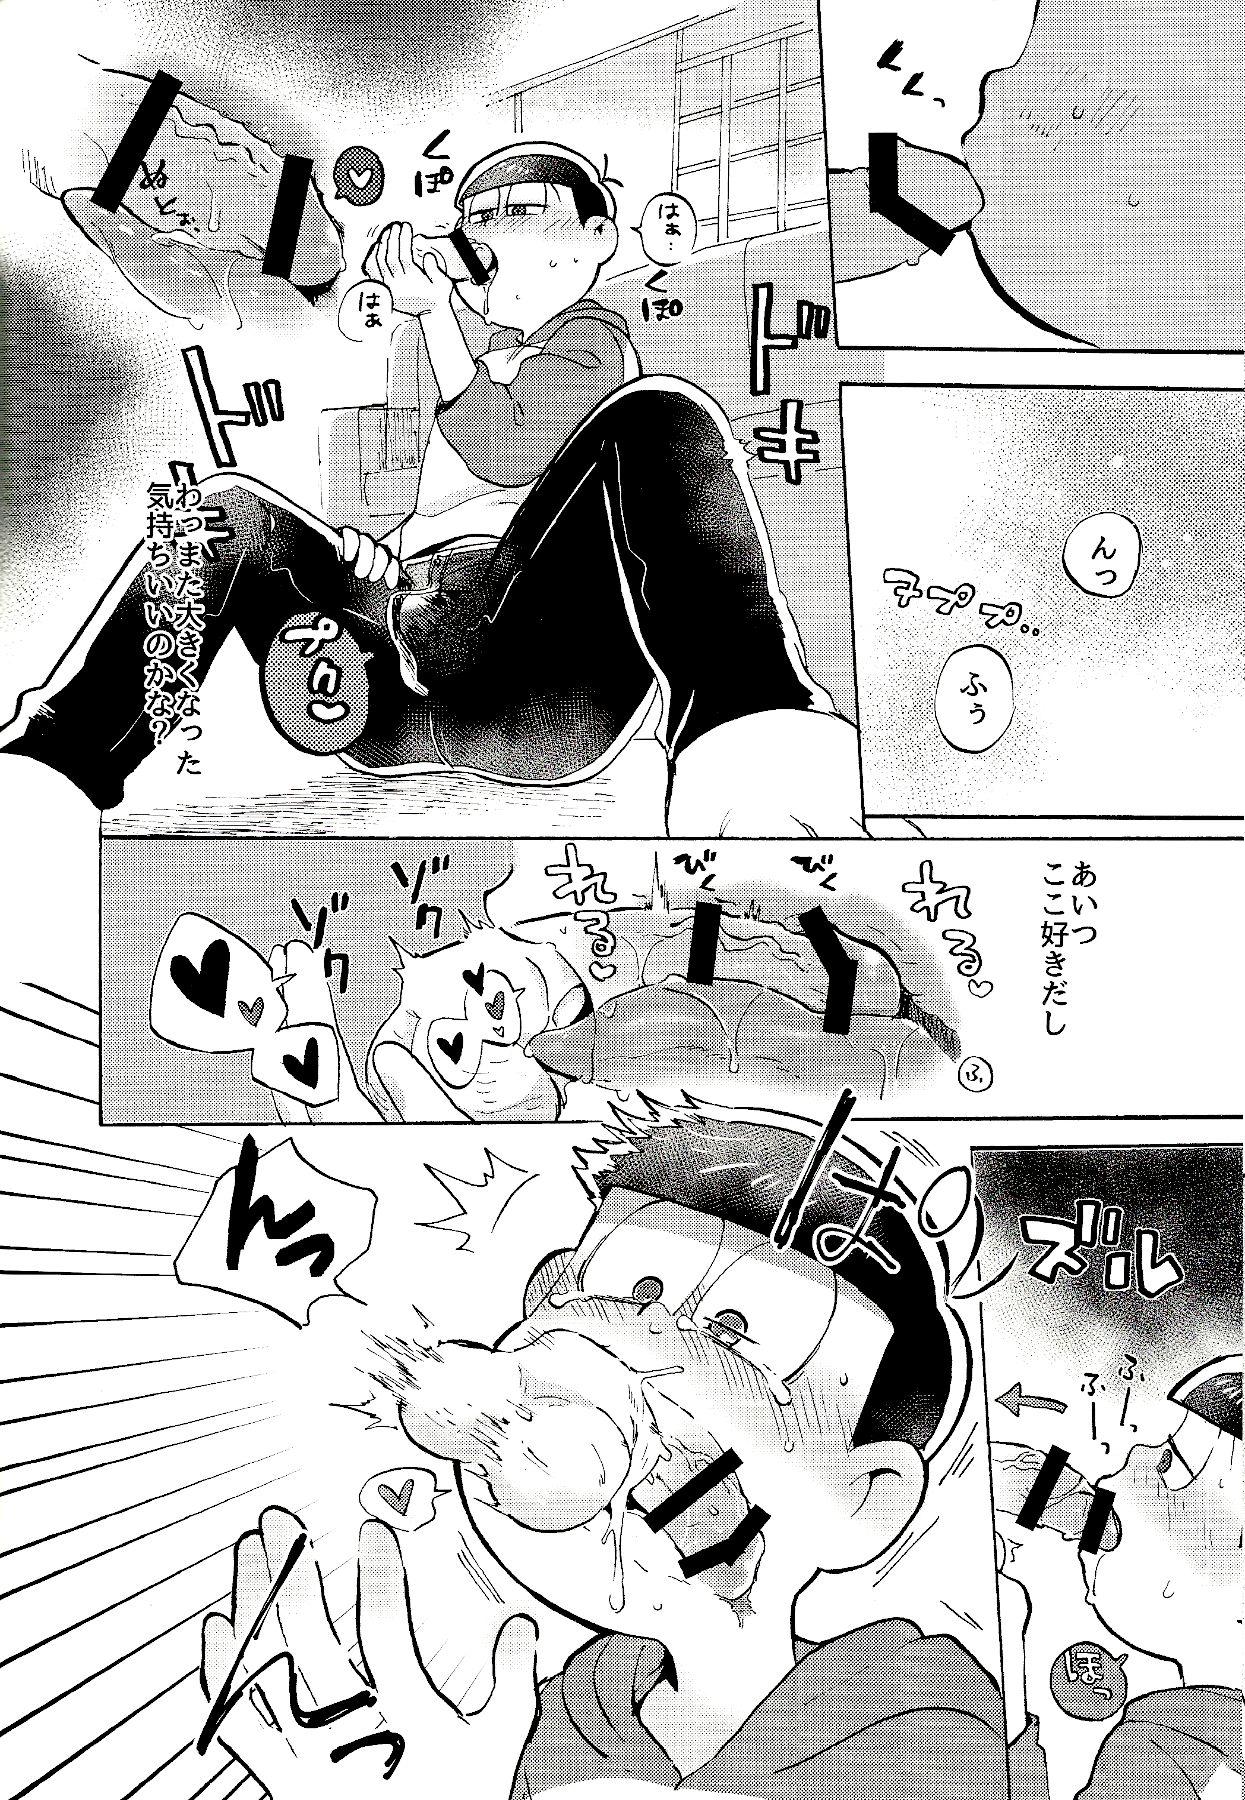 Guys Doko demo issho? - Osomatsu san  - Page 7